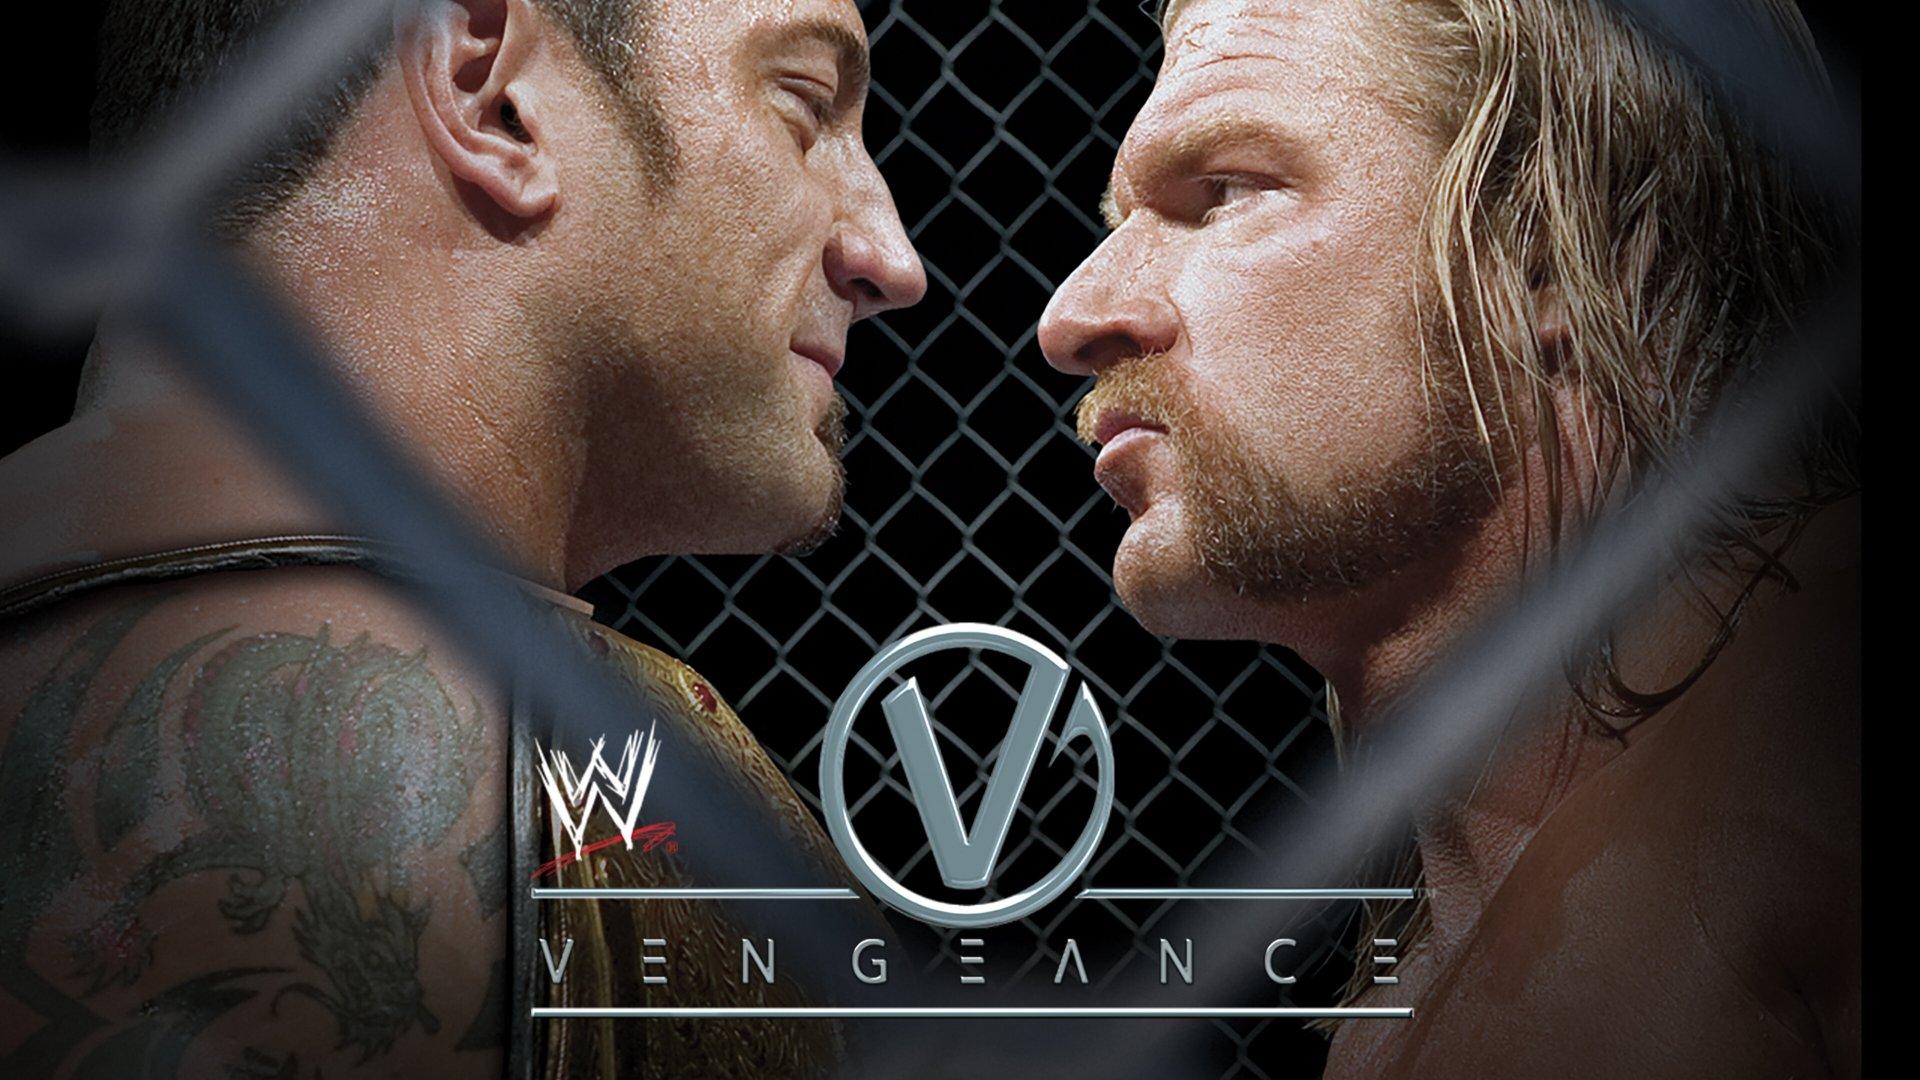 WWE Vengeance 2005